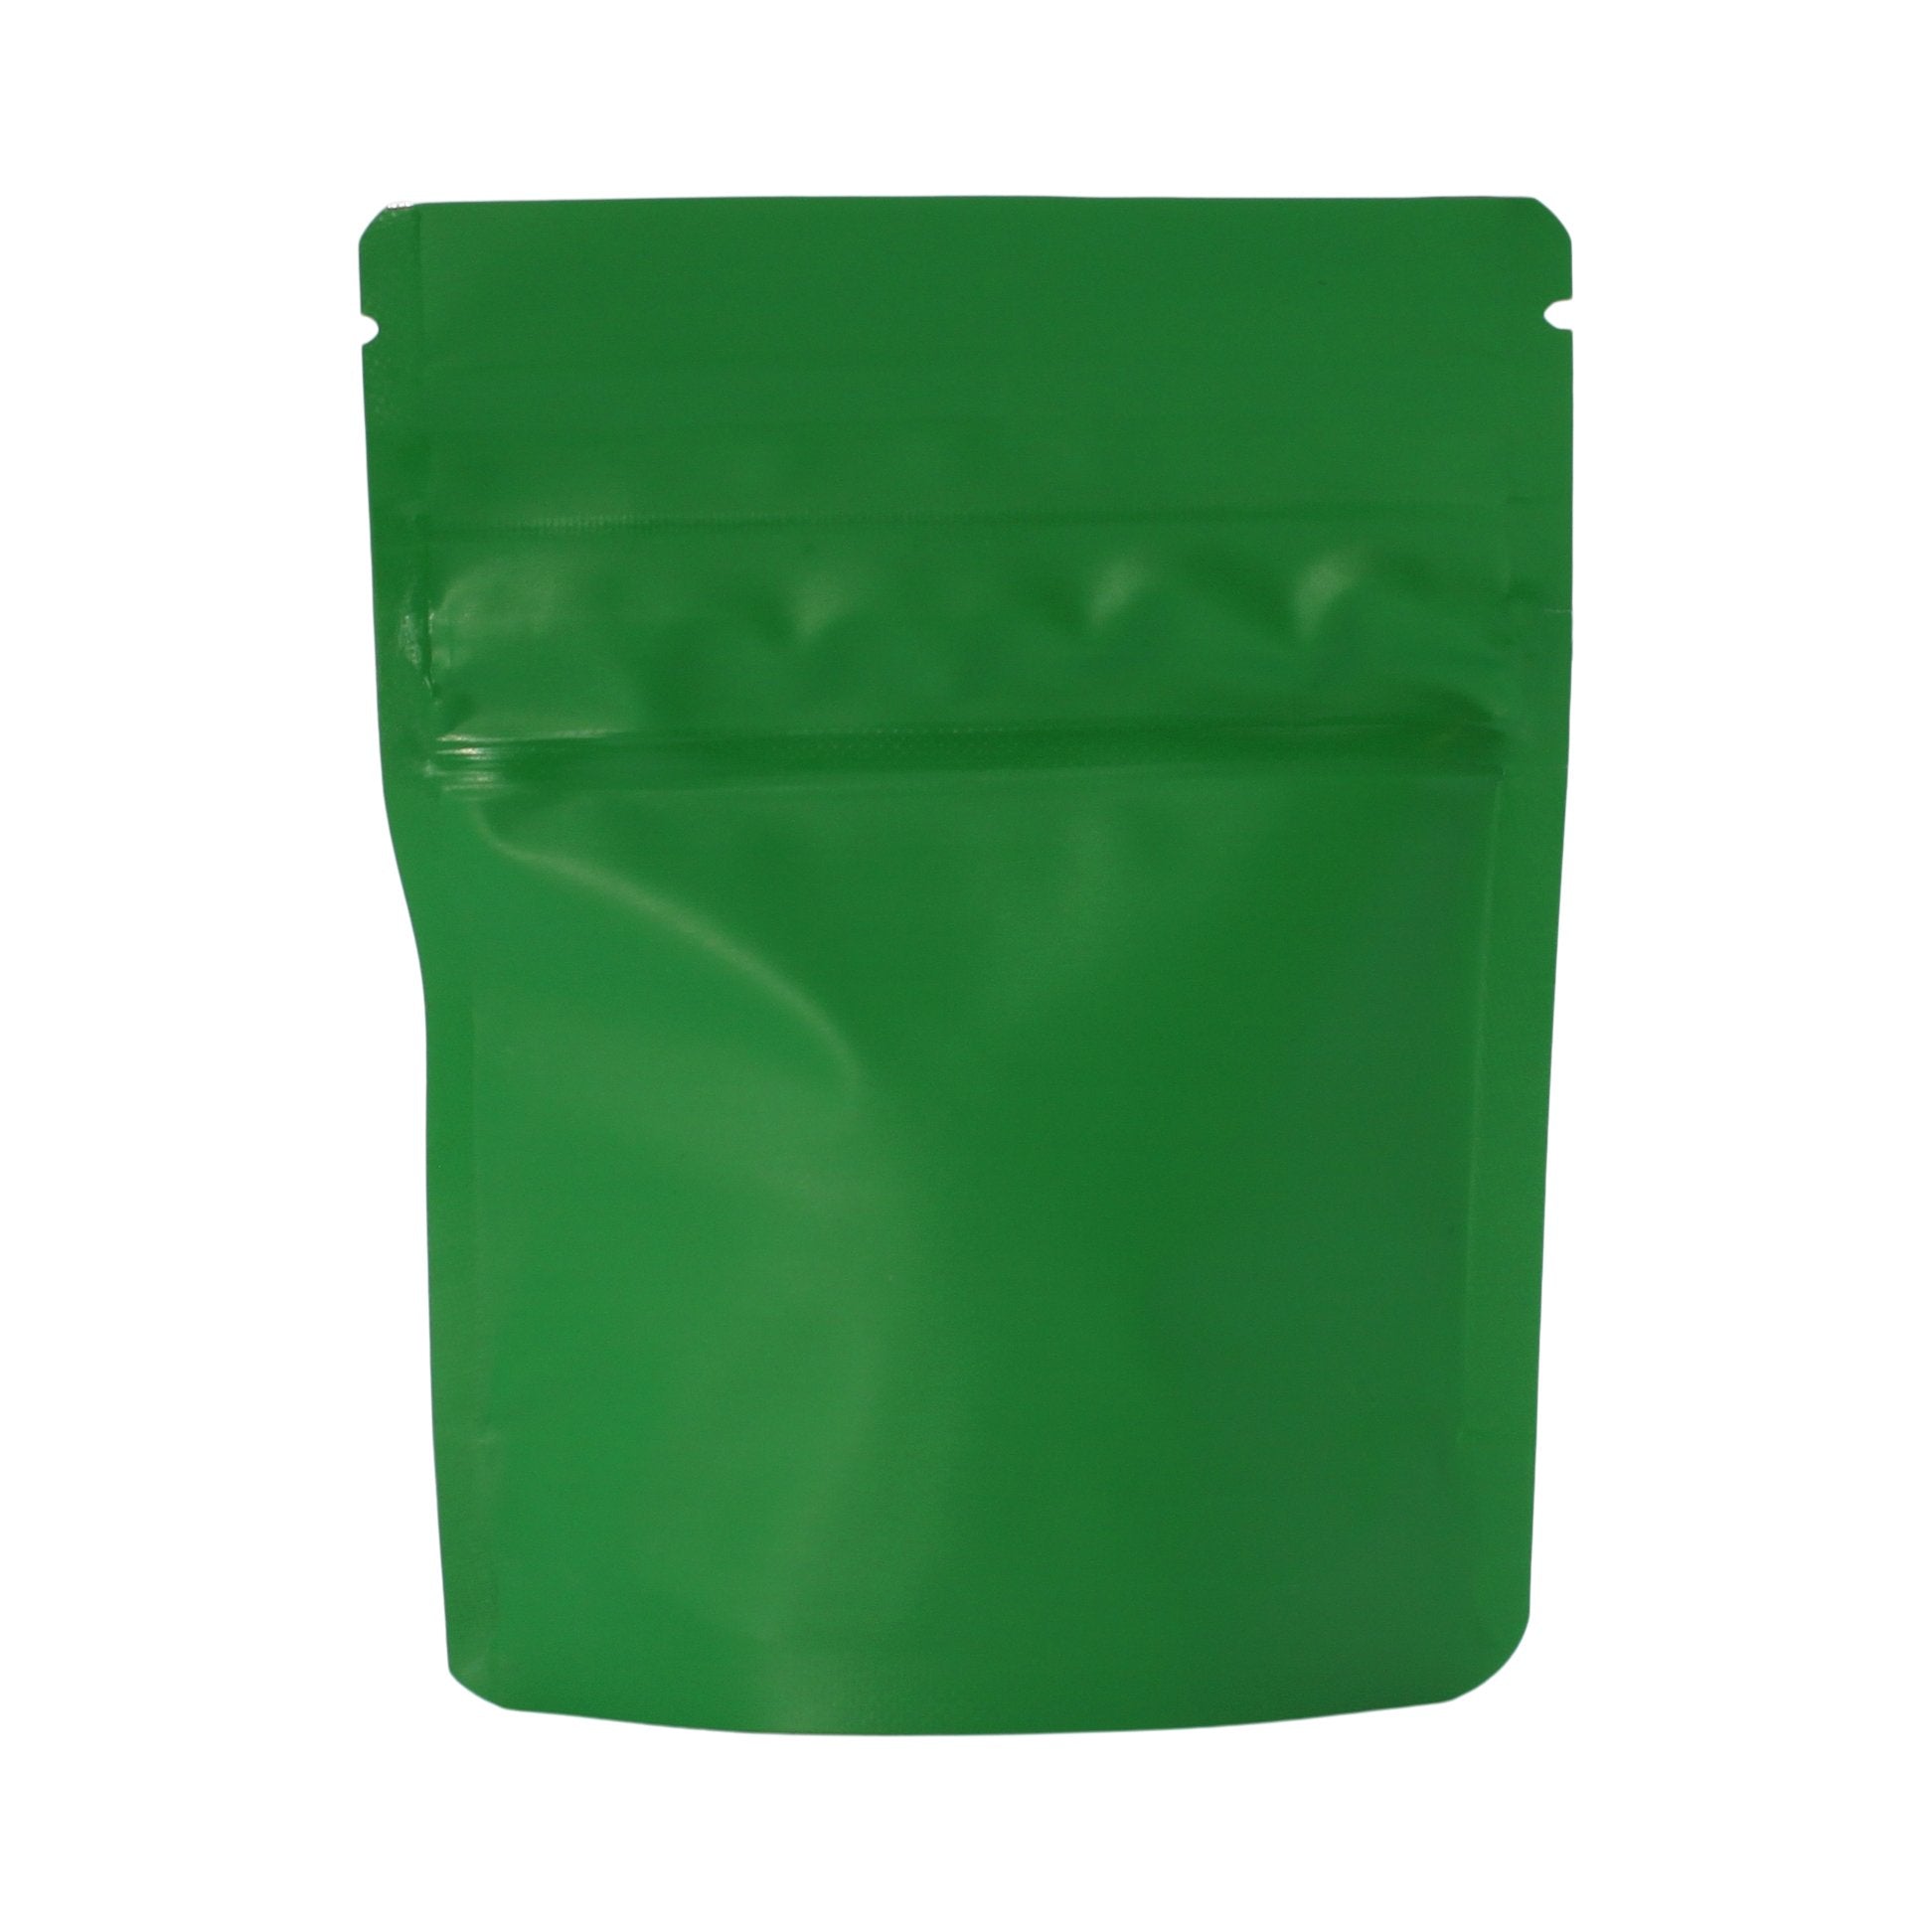 Bag King Child-Resistant Opaque Bag (1 gram) 3.5” x 4.5”